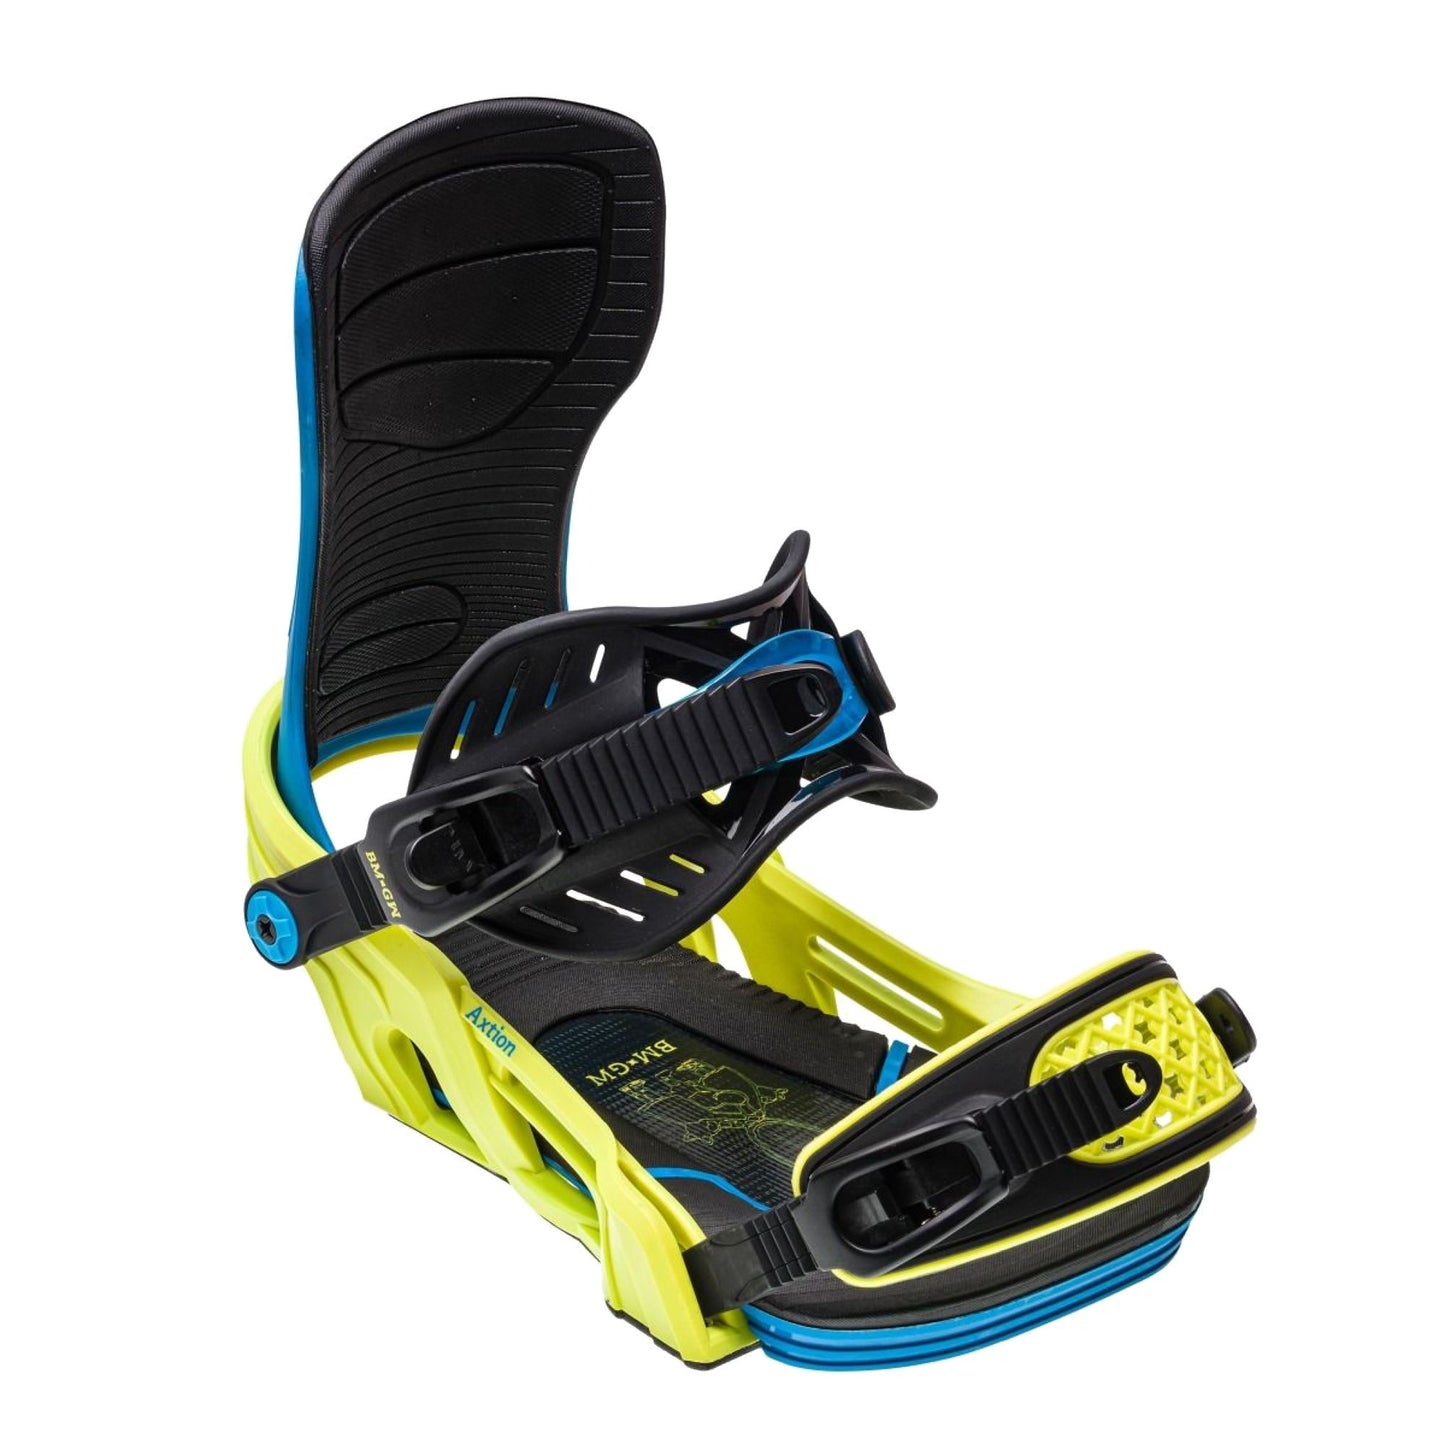 Bent Metal Axtion Snowboard Bindings Blue/Green Snowboard Bindings